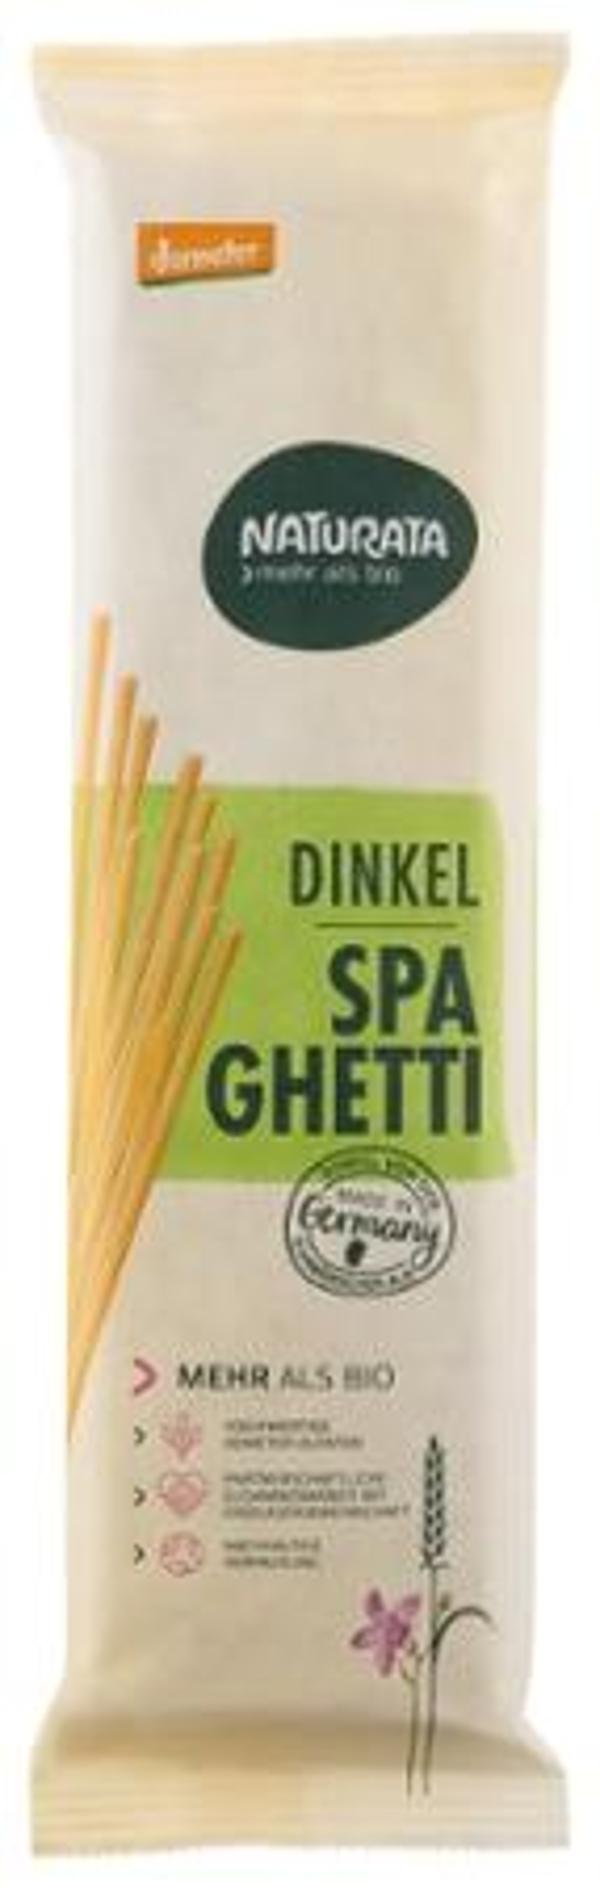 Produktfoto zu Dinkel-Spaghetti